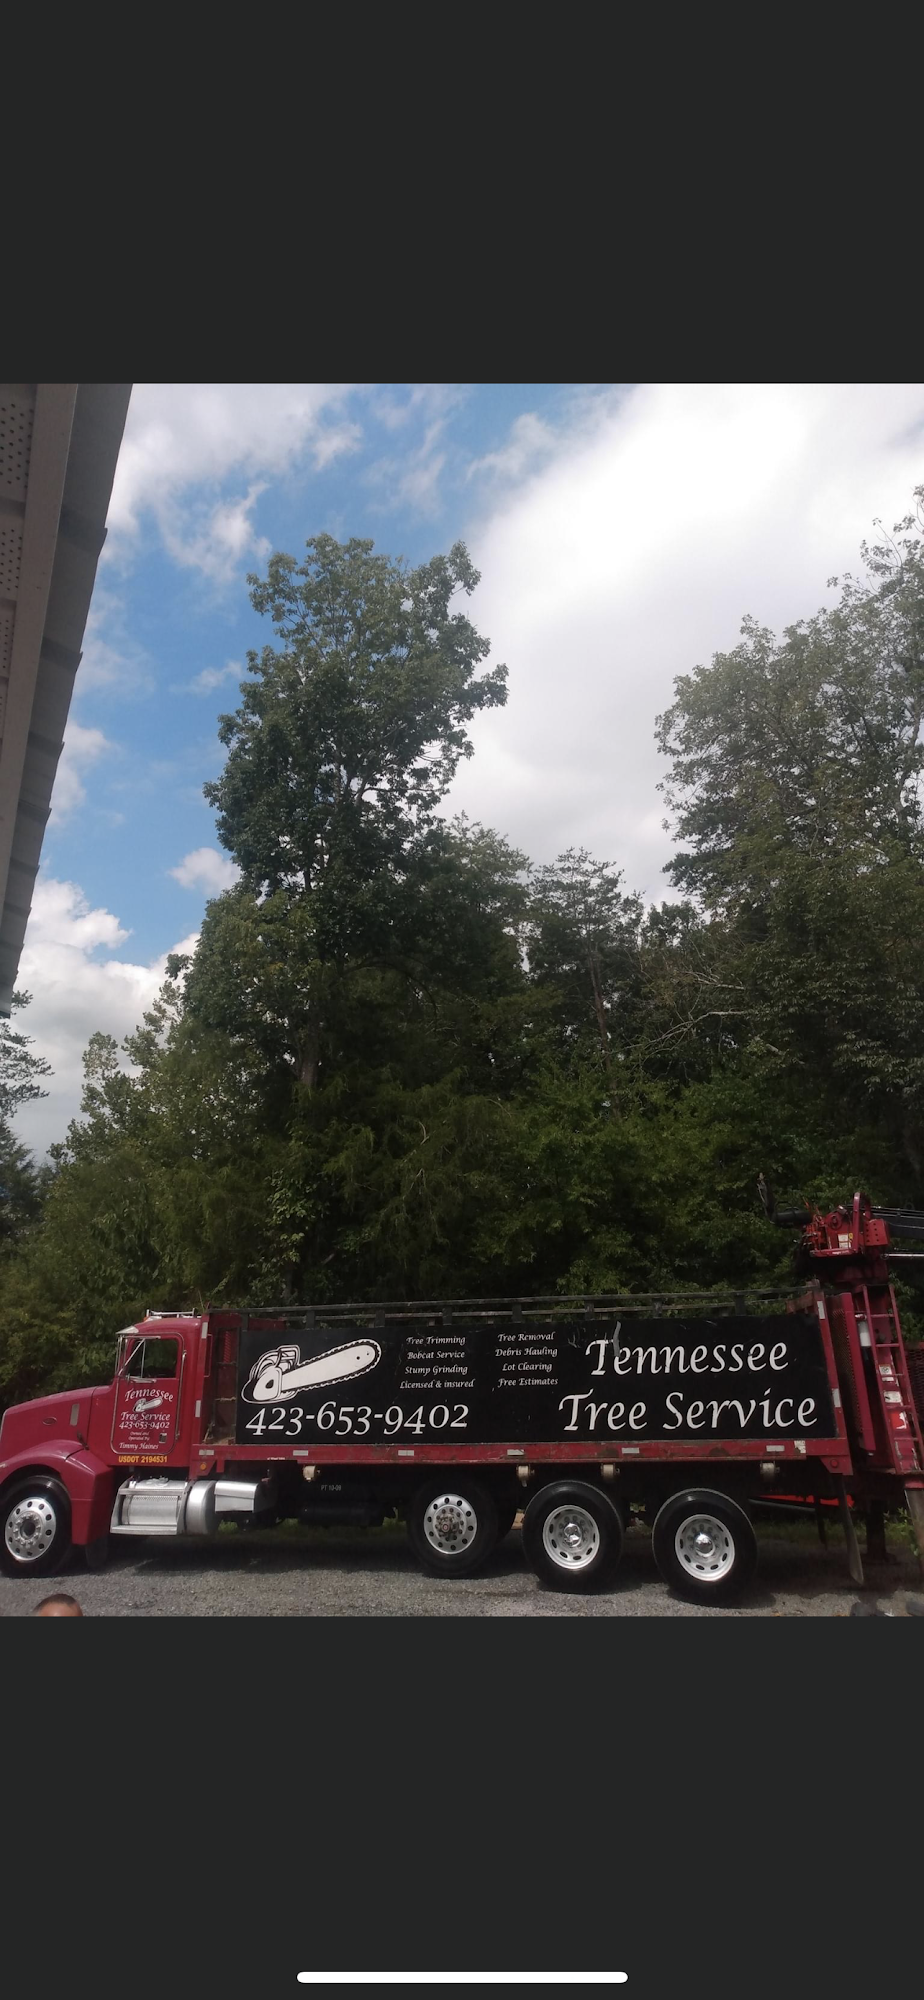 Tennessee Tree Service